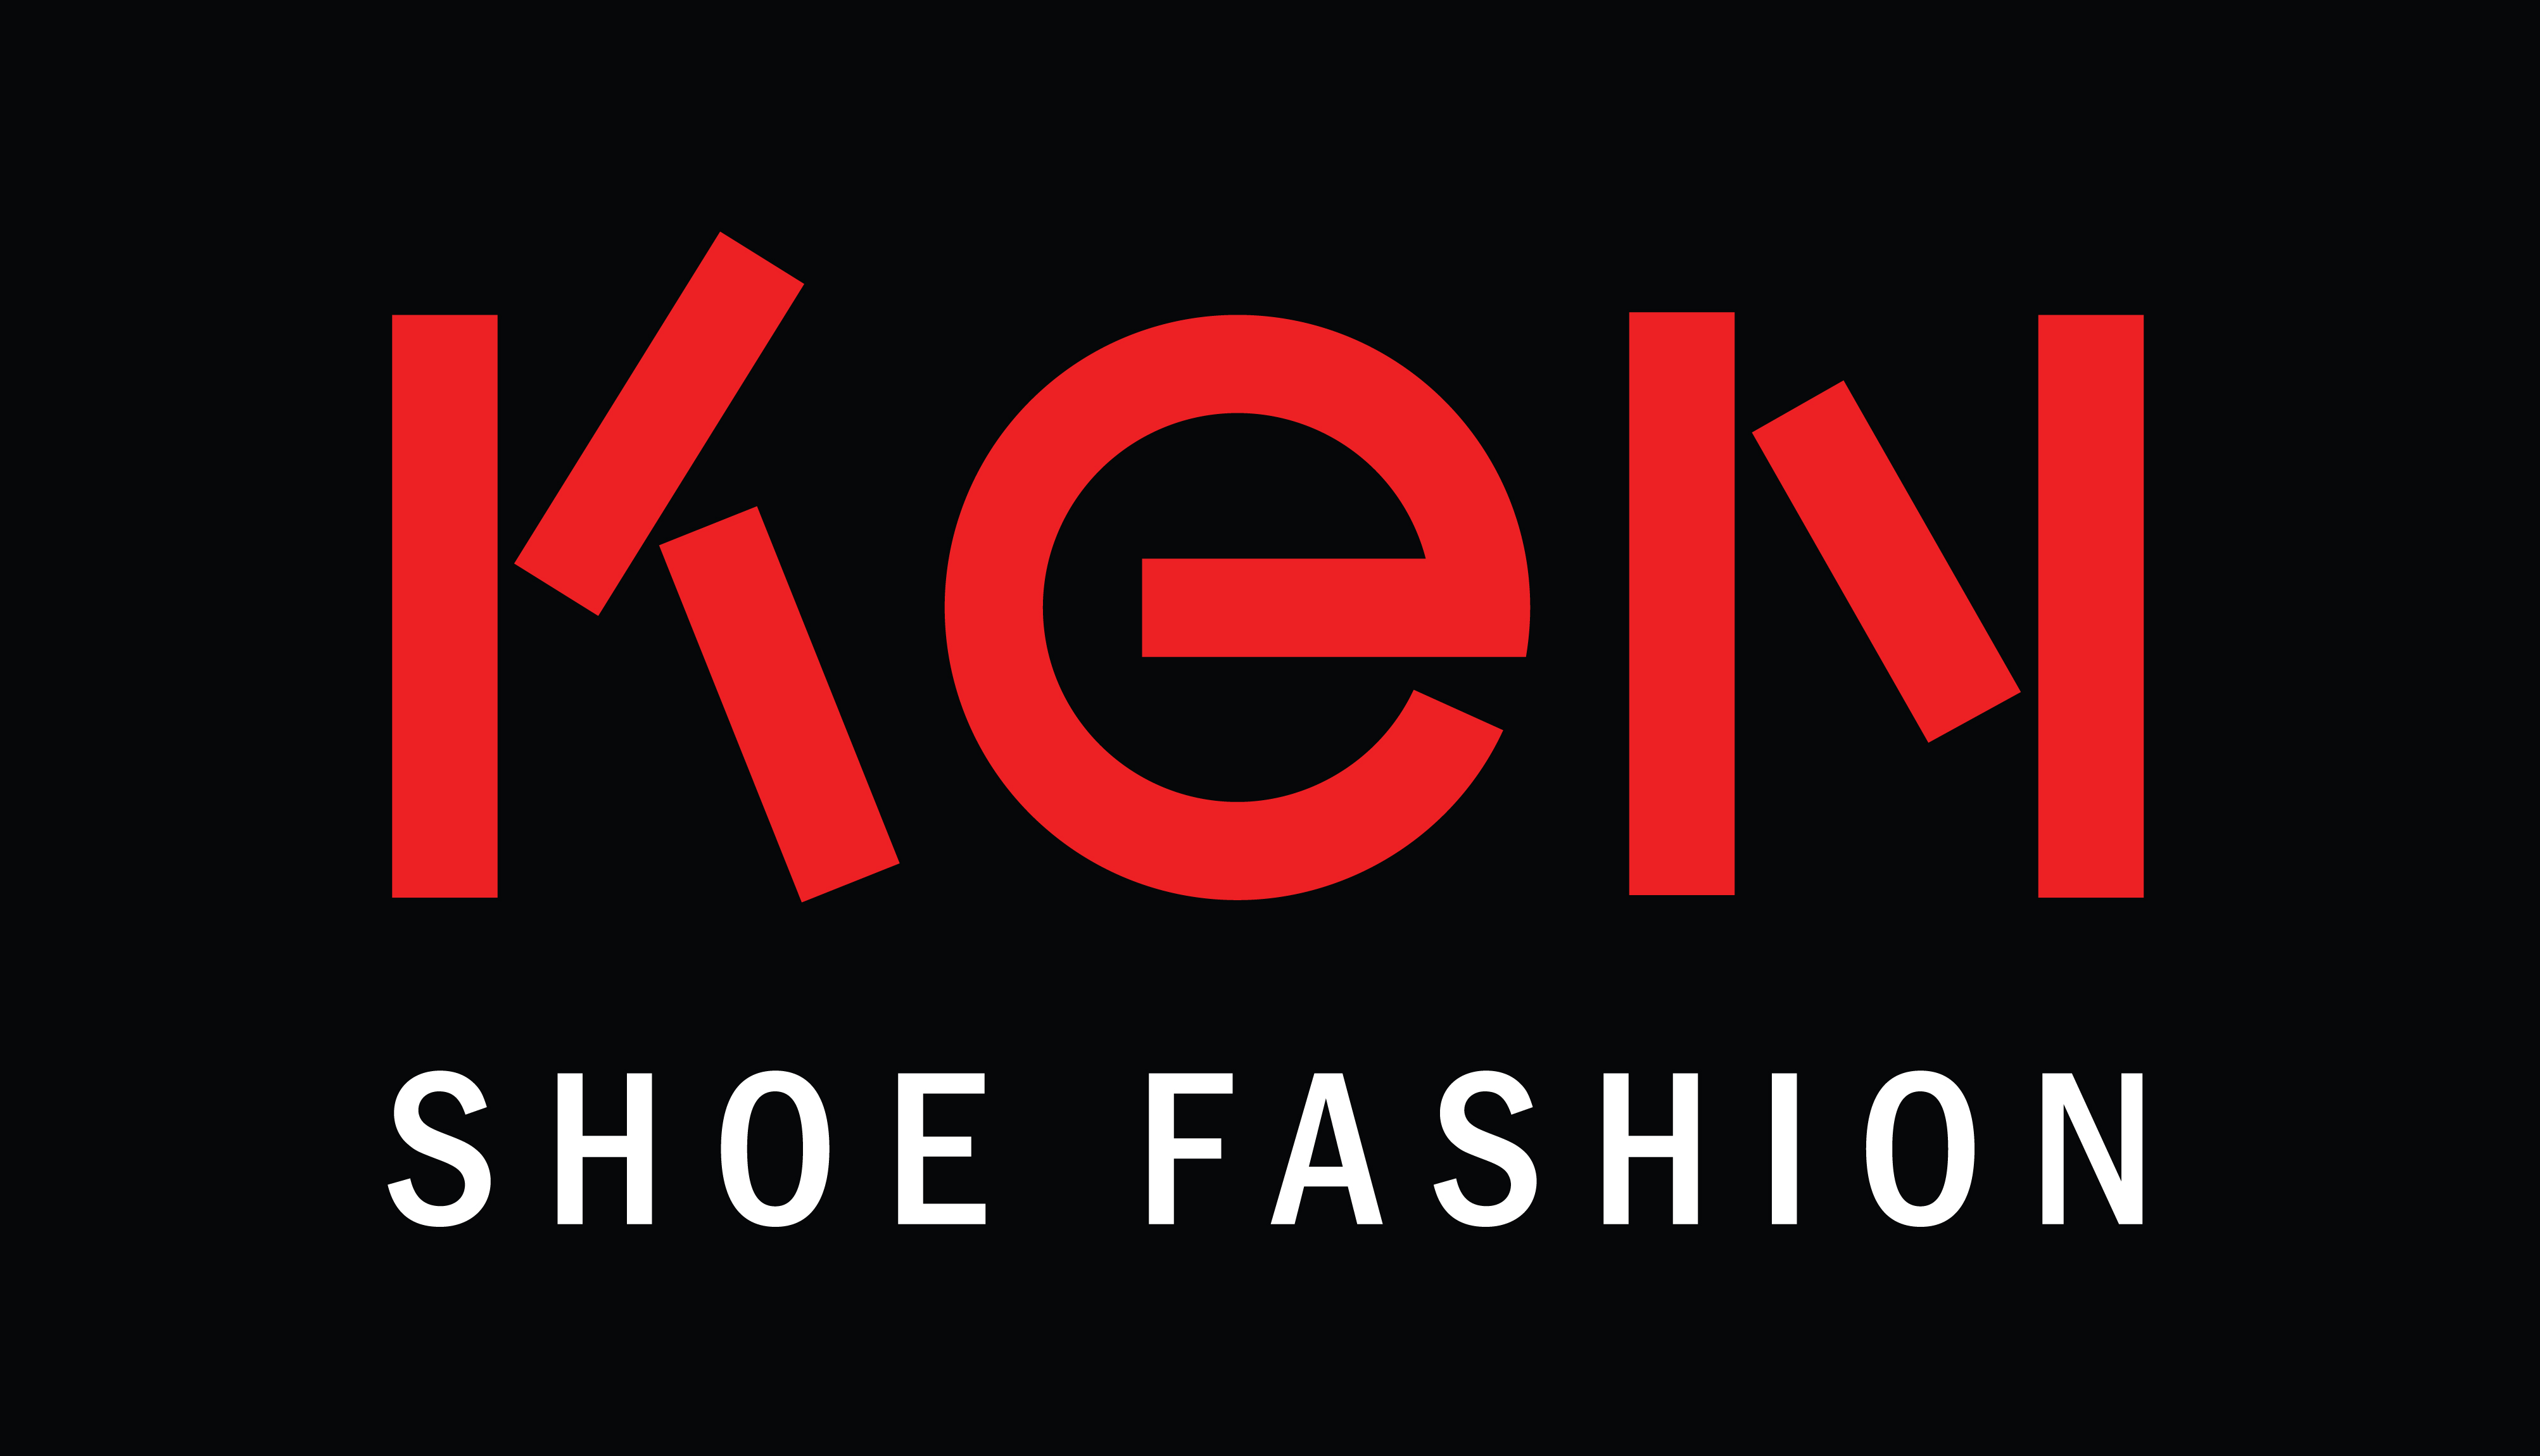 Ken Shoe Fashion